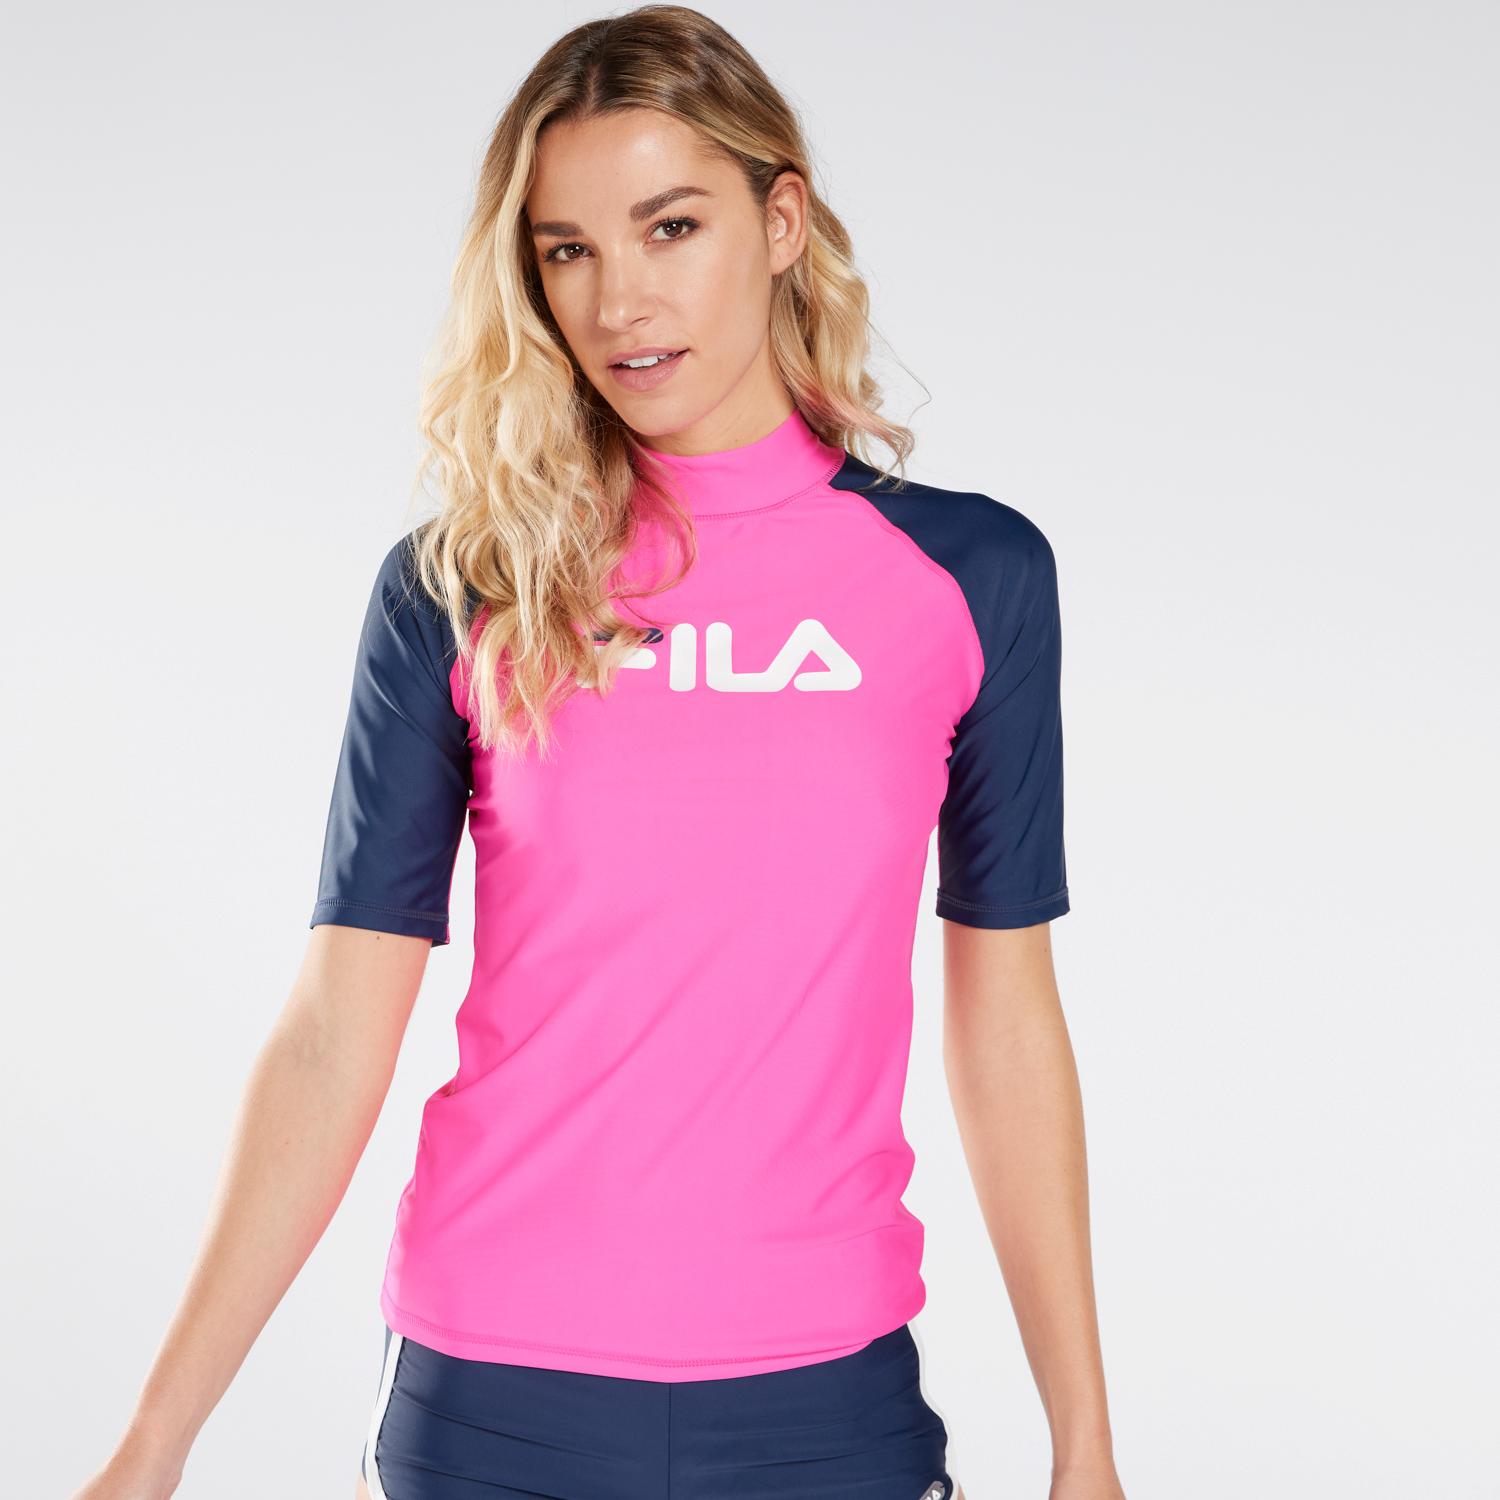 Camiseta adidas - Rosa - Camiseta Fitness Mujer, Sprinter